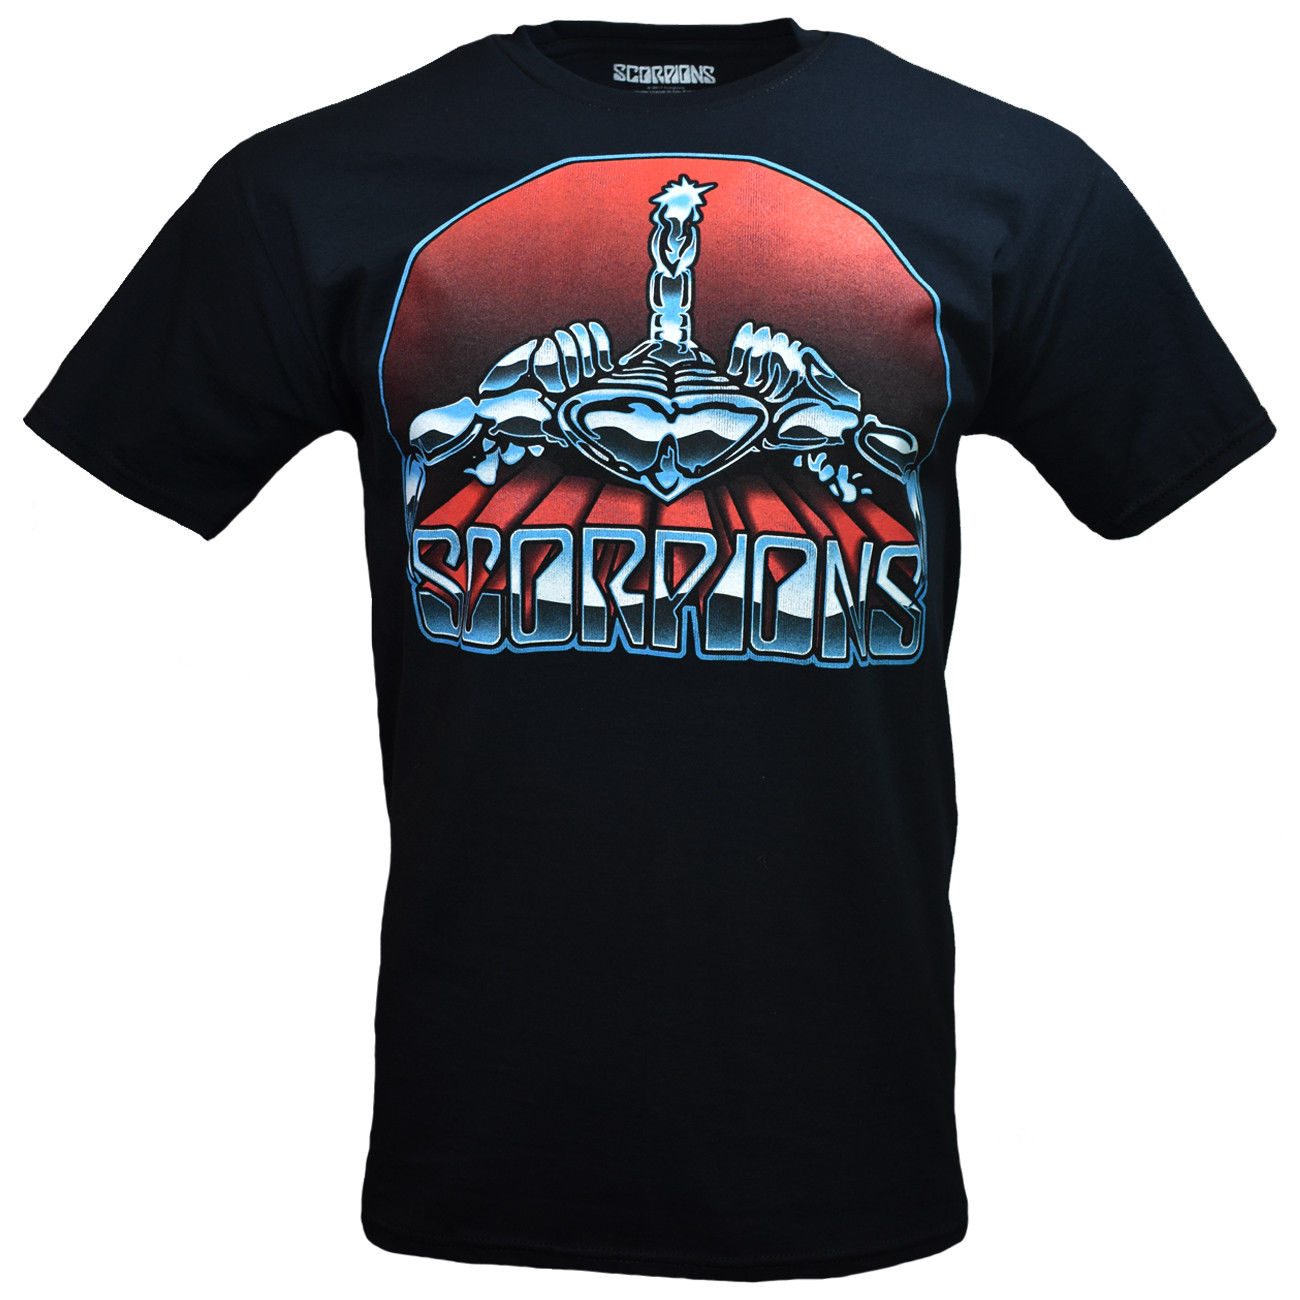 Scorpions Men's Graphic T-Shirt